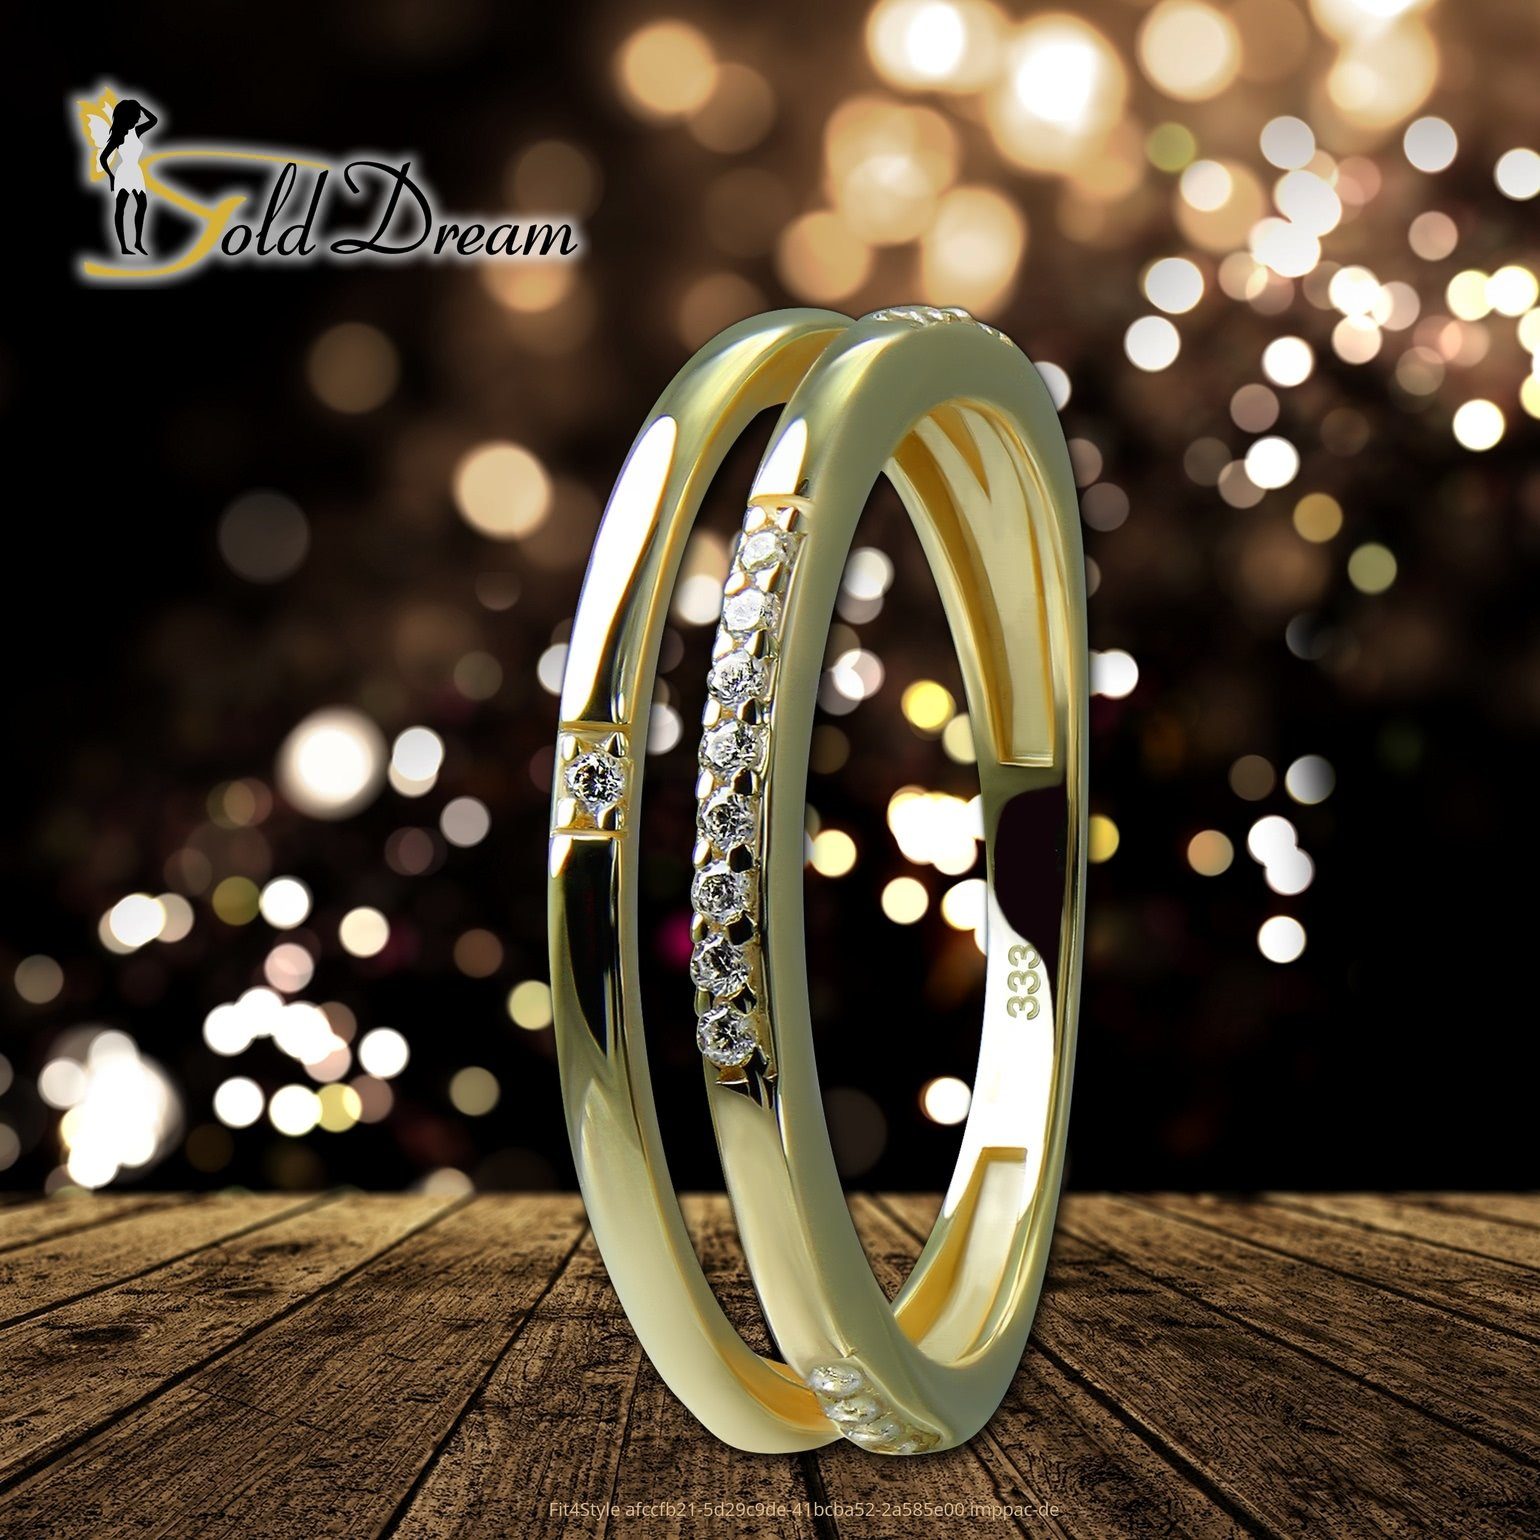 GoldDream Goldring GoldDream weiß Double Farbe: 8 gold, (Fingerring), Karat, Gelbgold Ring Ring Double 333 Gr.54 - Damen Gold